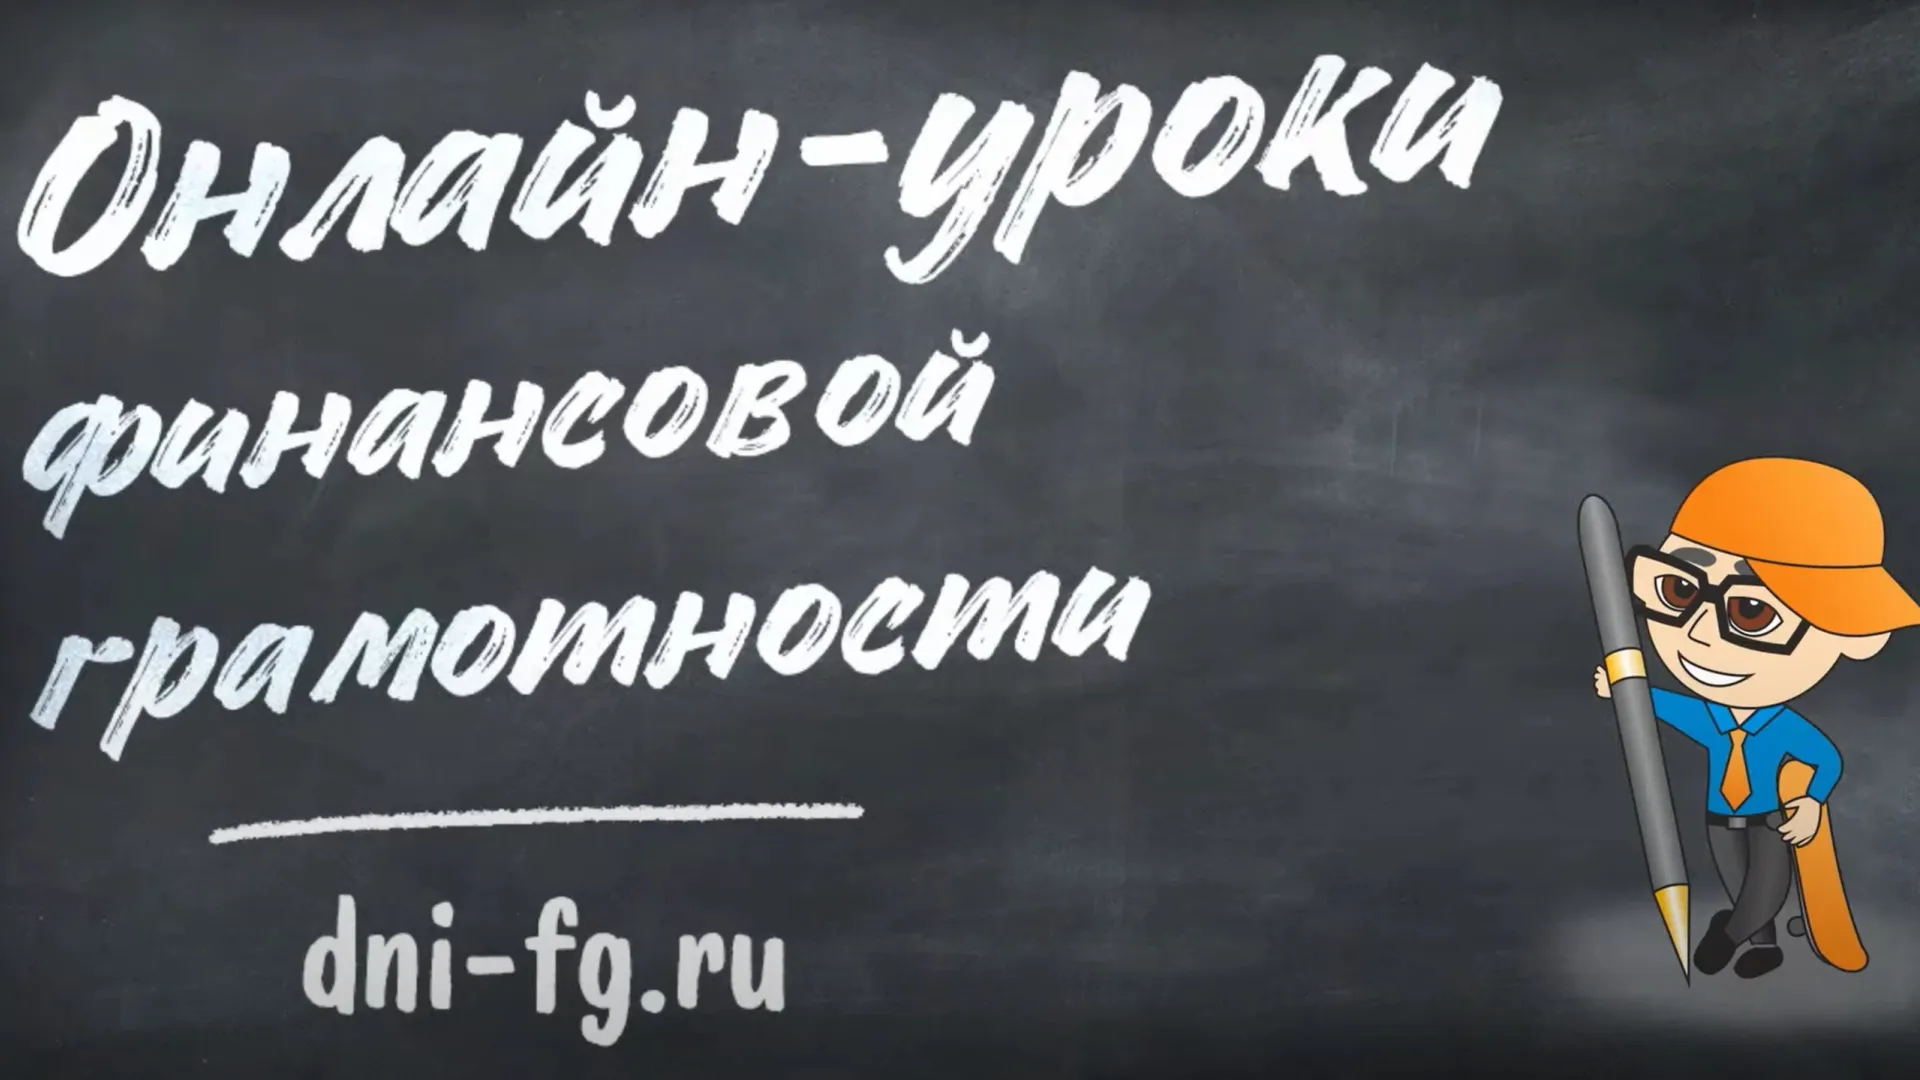 Фото: Кадр из видео со страницы dni-fg.ru